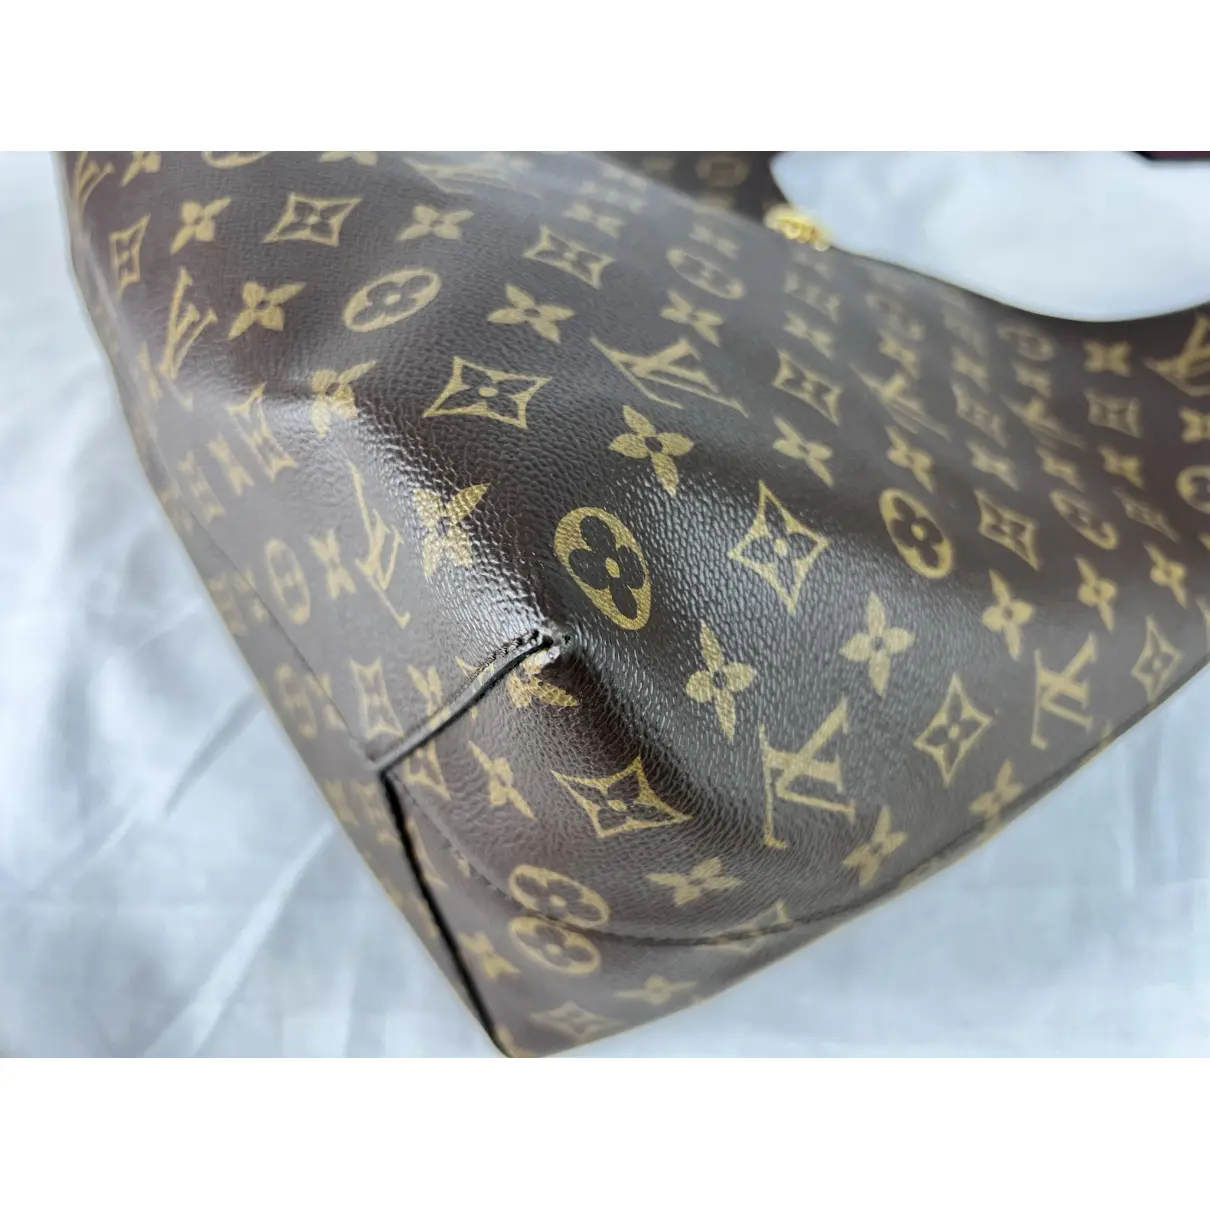 Flower Hobo leather handbag Louis Vuitton